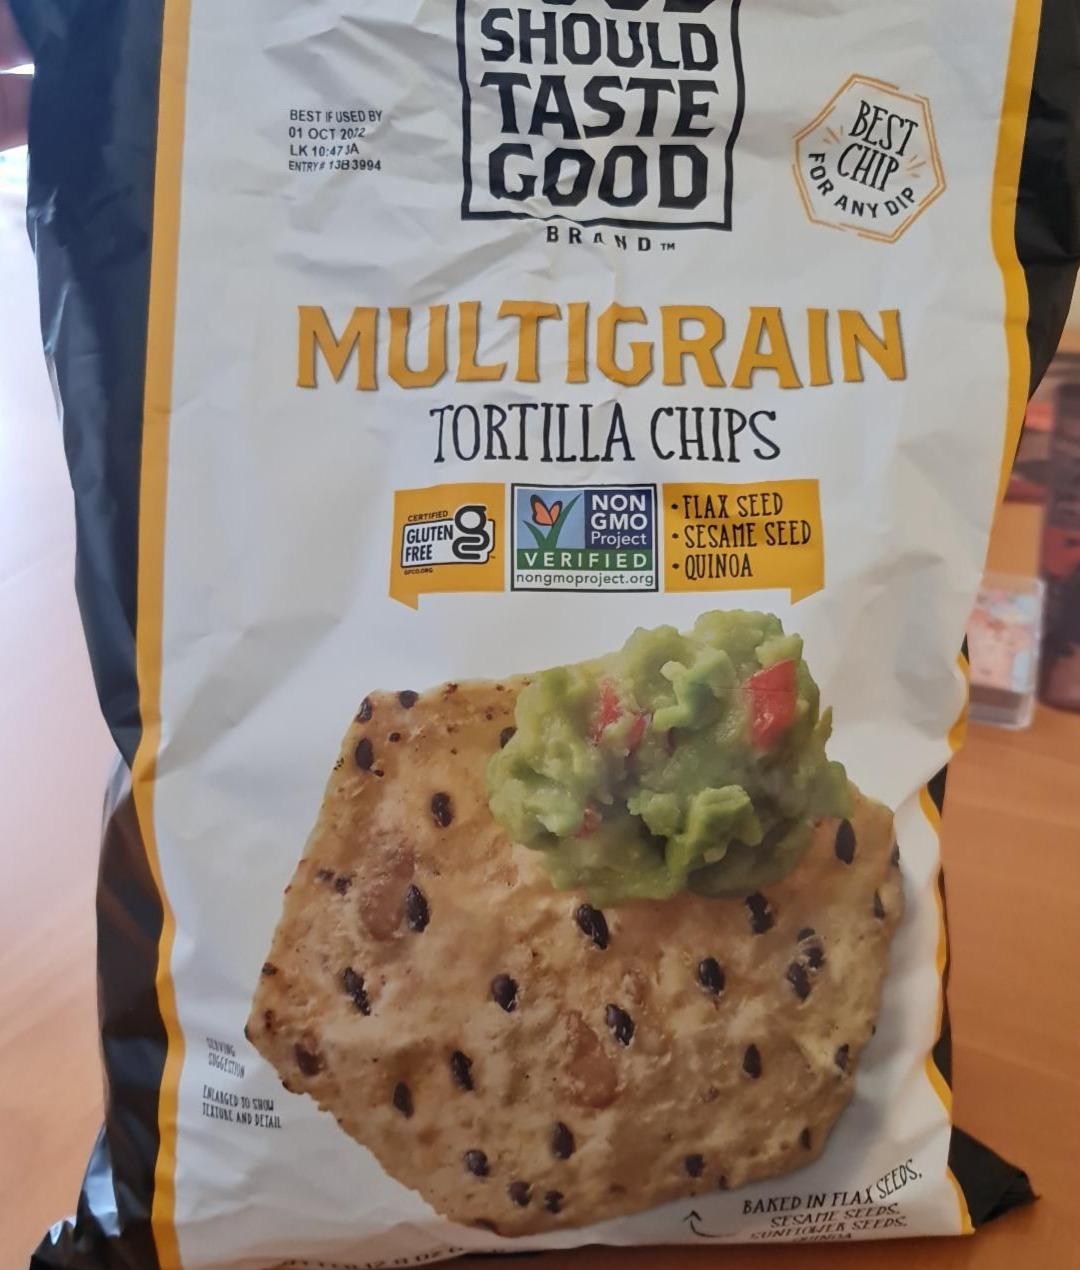 Фото - Multigrain tortilla chips Food Should Taste Good